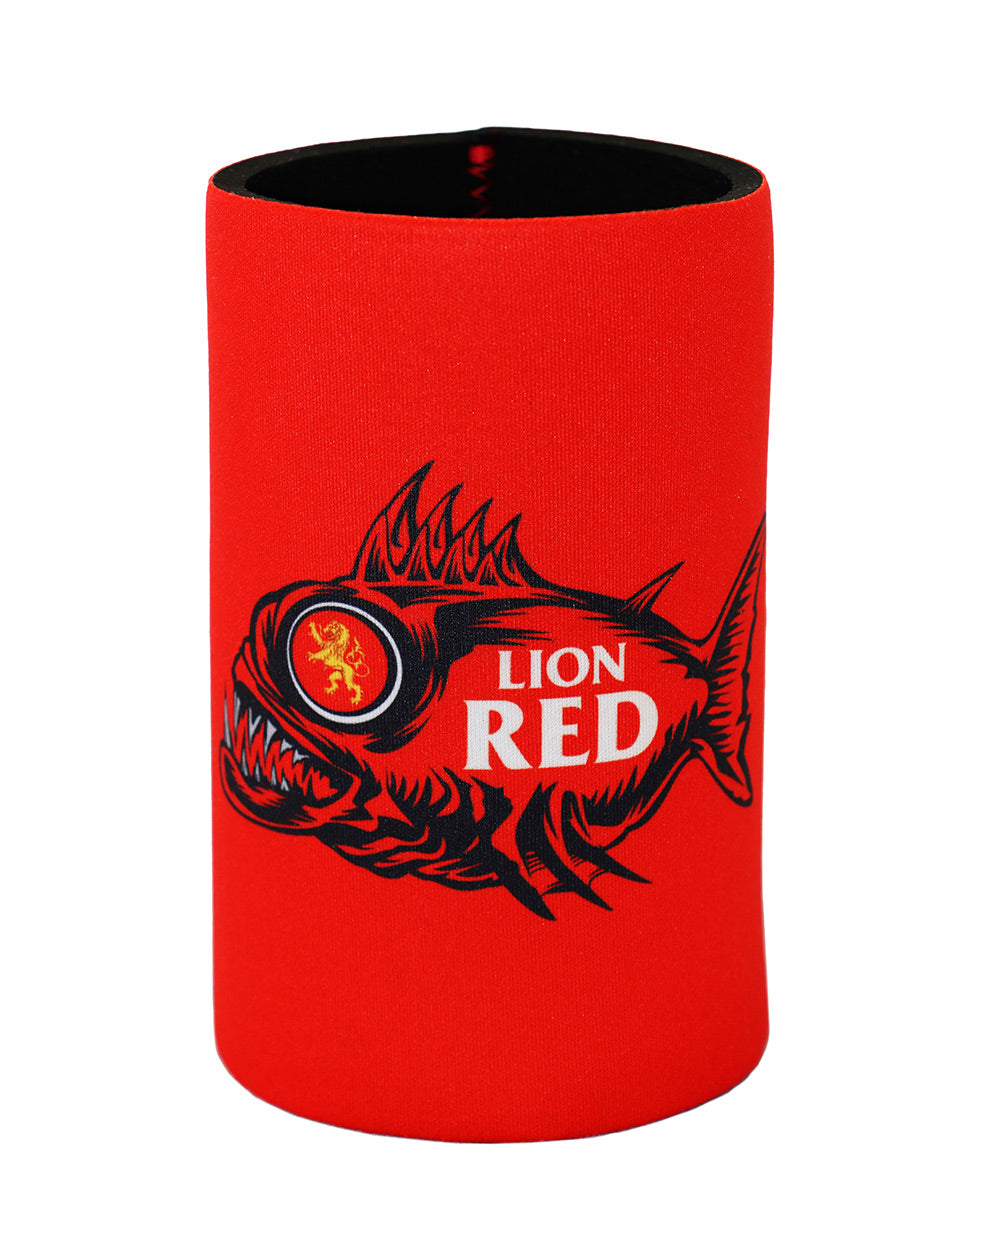 Lion Red Quart Holder -  Beer Gear Apparel & Merchandise - Speights - Lion Red - VB - Tokyo Dy merch